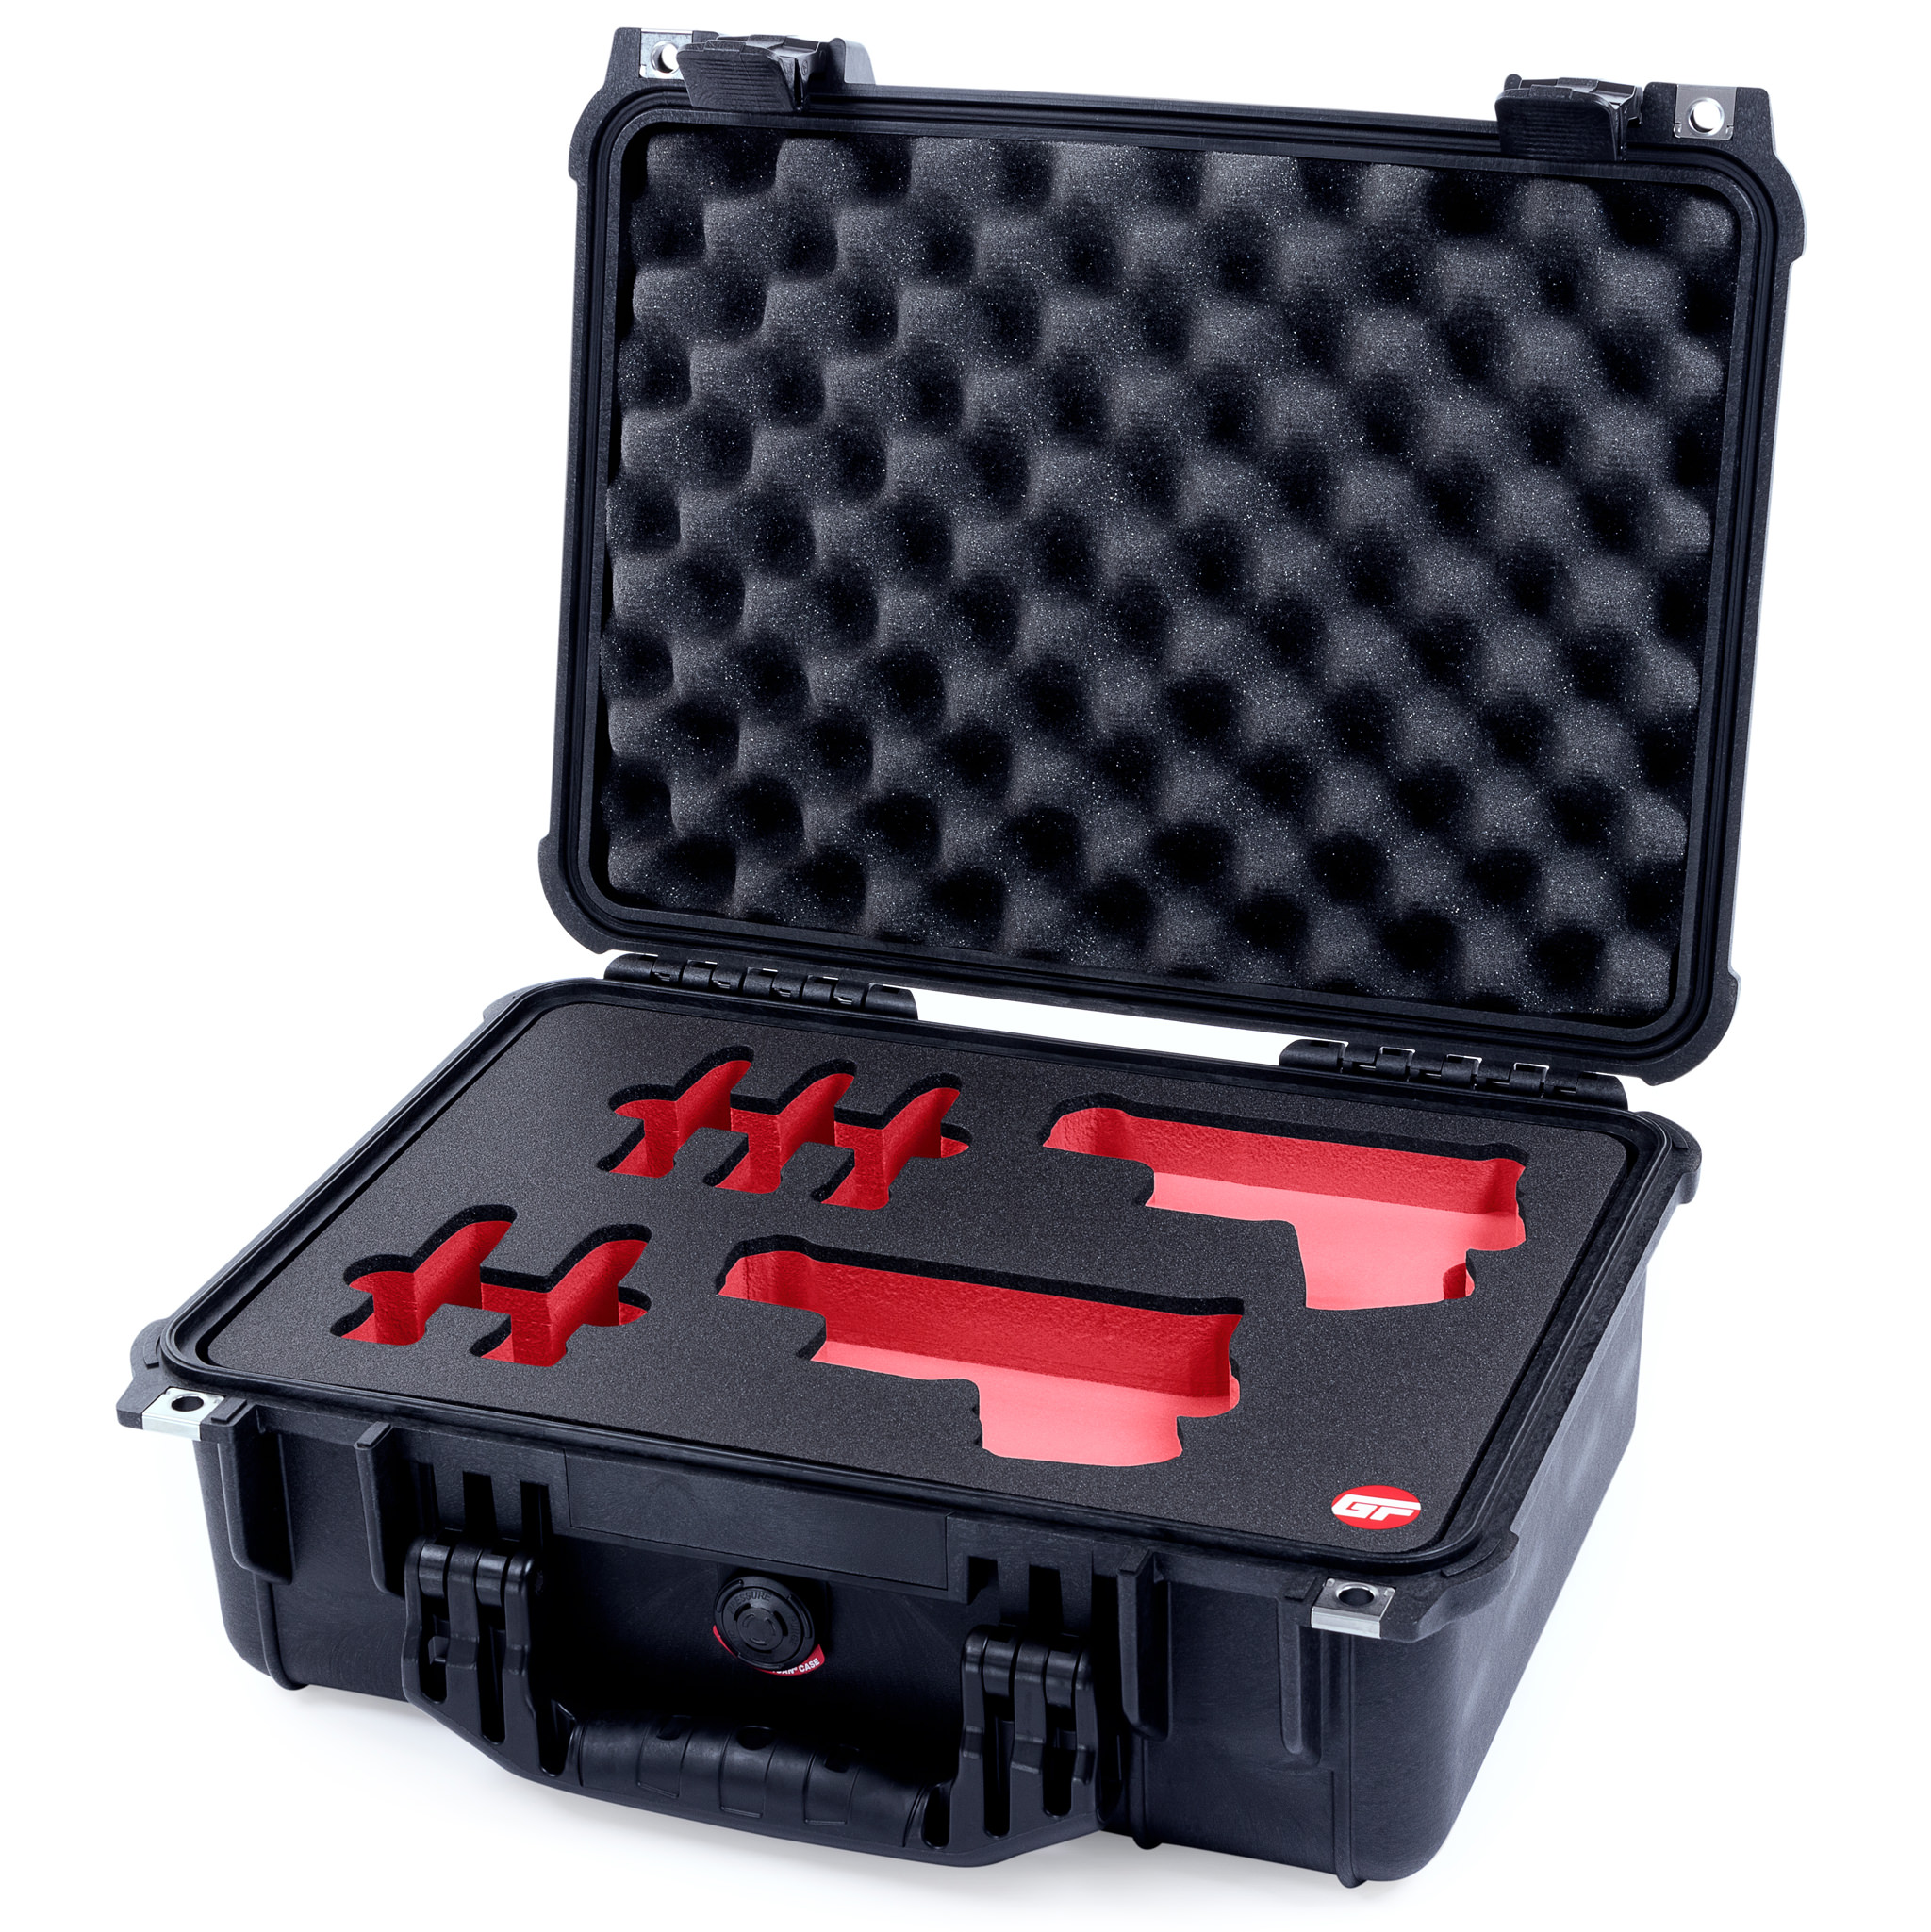 nameplate New 5 pistol handgun foam insert kit fits your Pelican 1500 case 